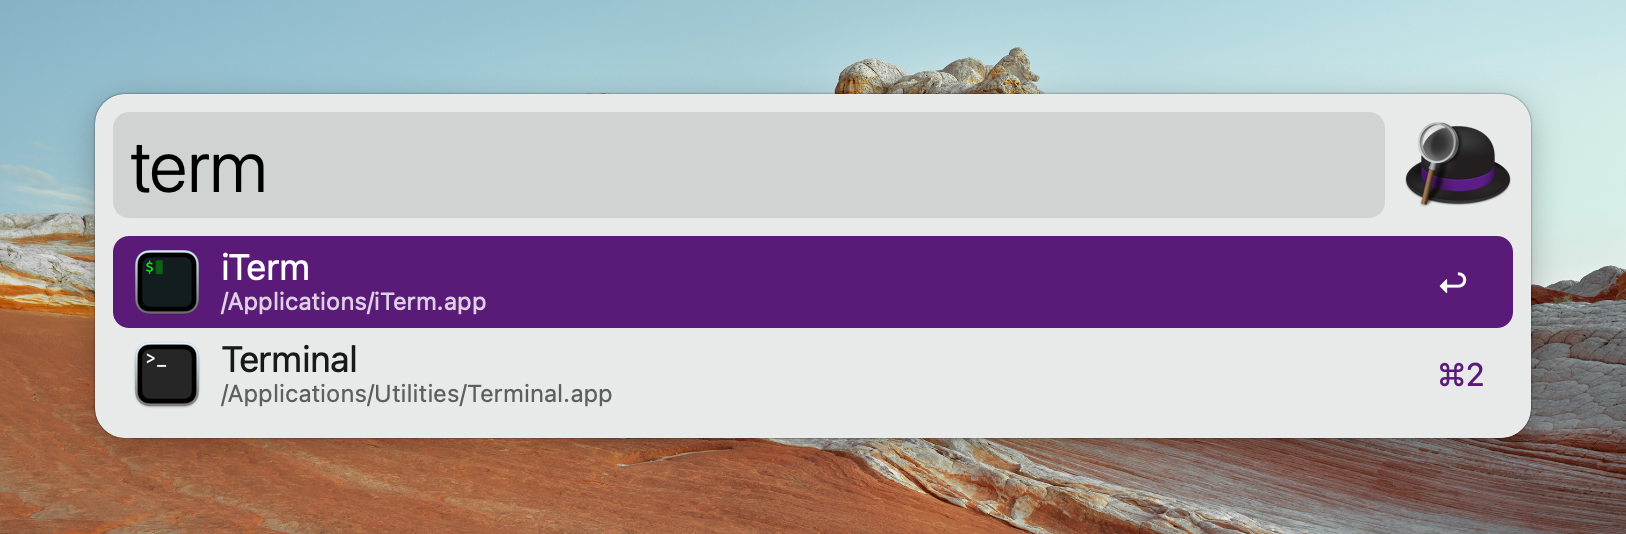 Alfred launcher window demo screenshot